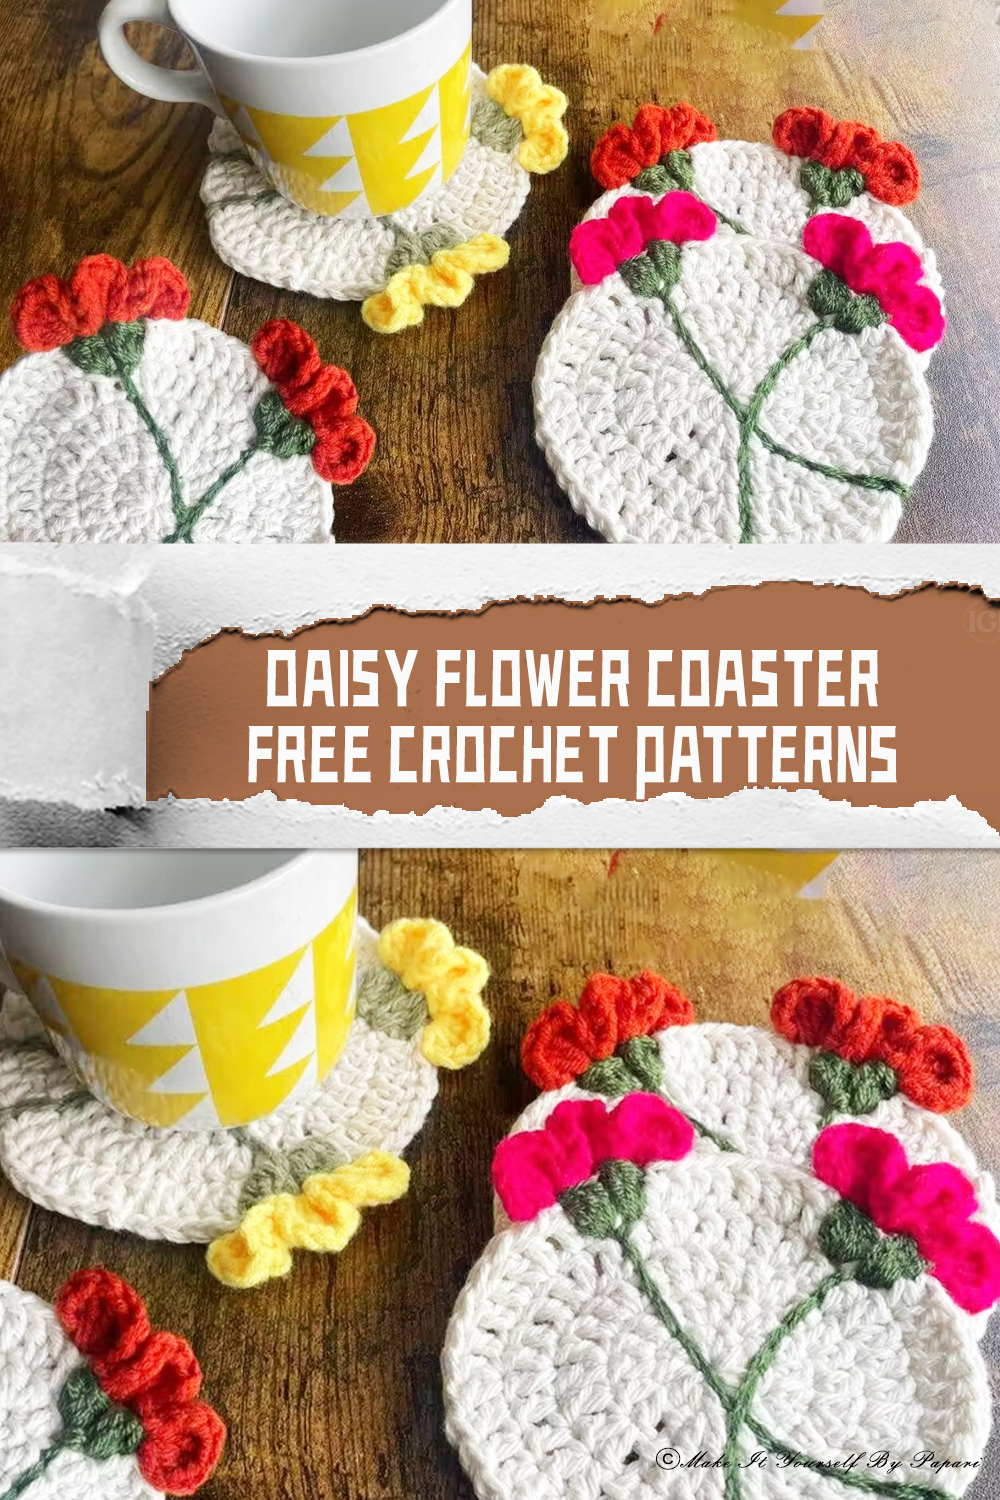 FREE Daisy Flower Coaster Crochet Patterns